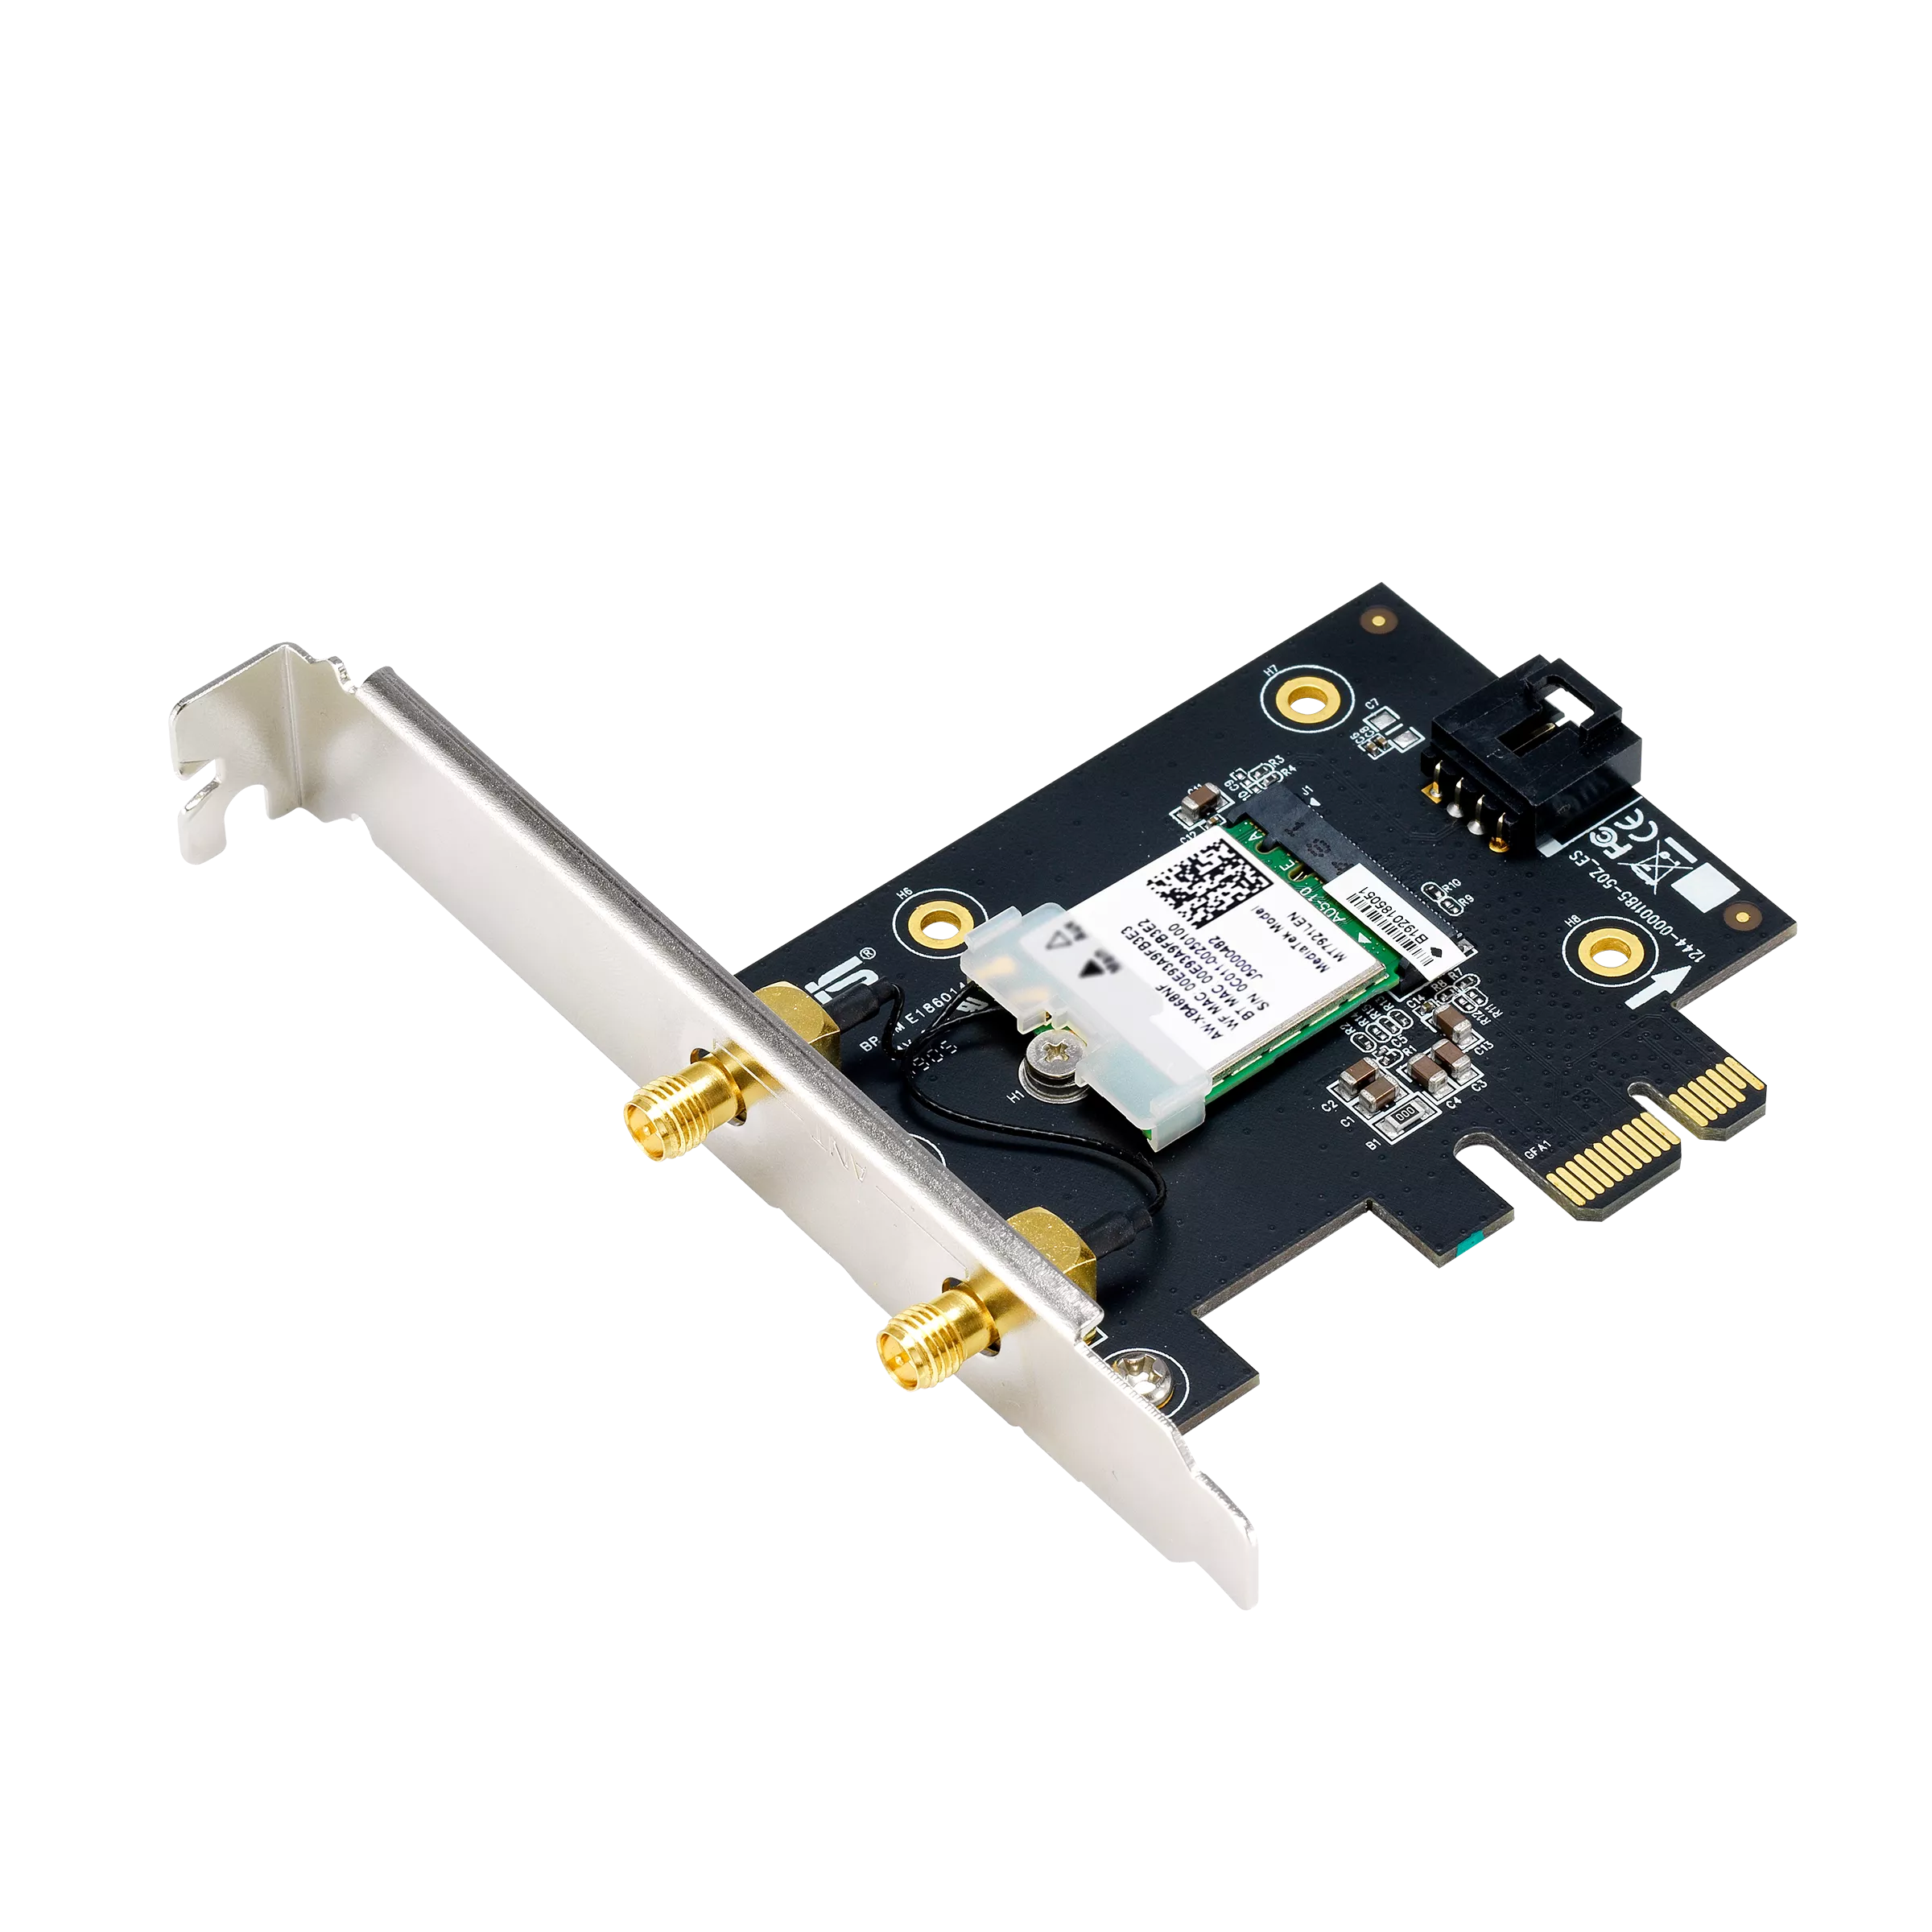 Asus - Asus AXE5400 Tri Band PCI-E WiFi 6E Network Card